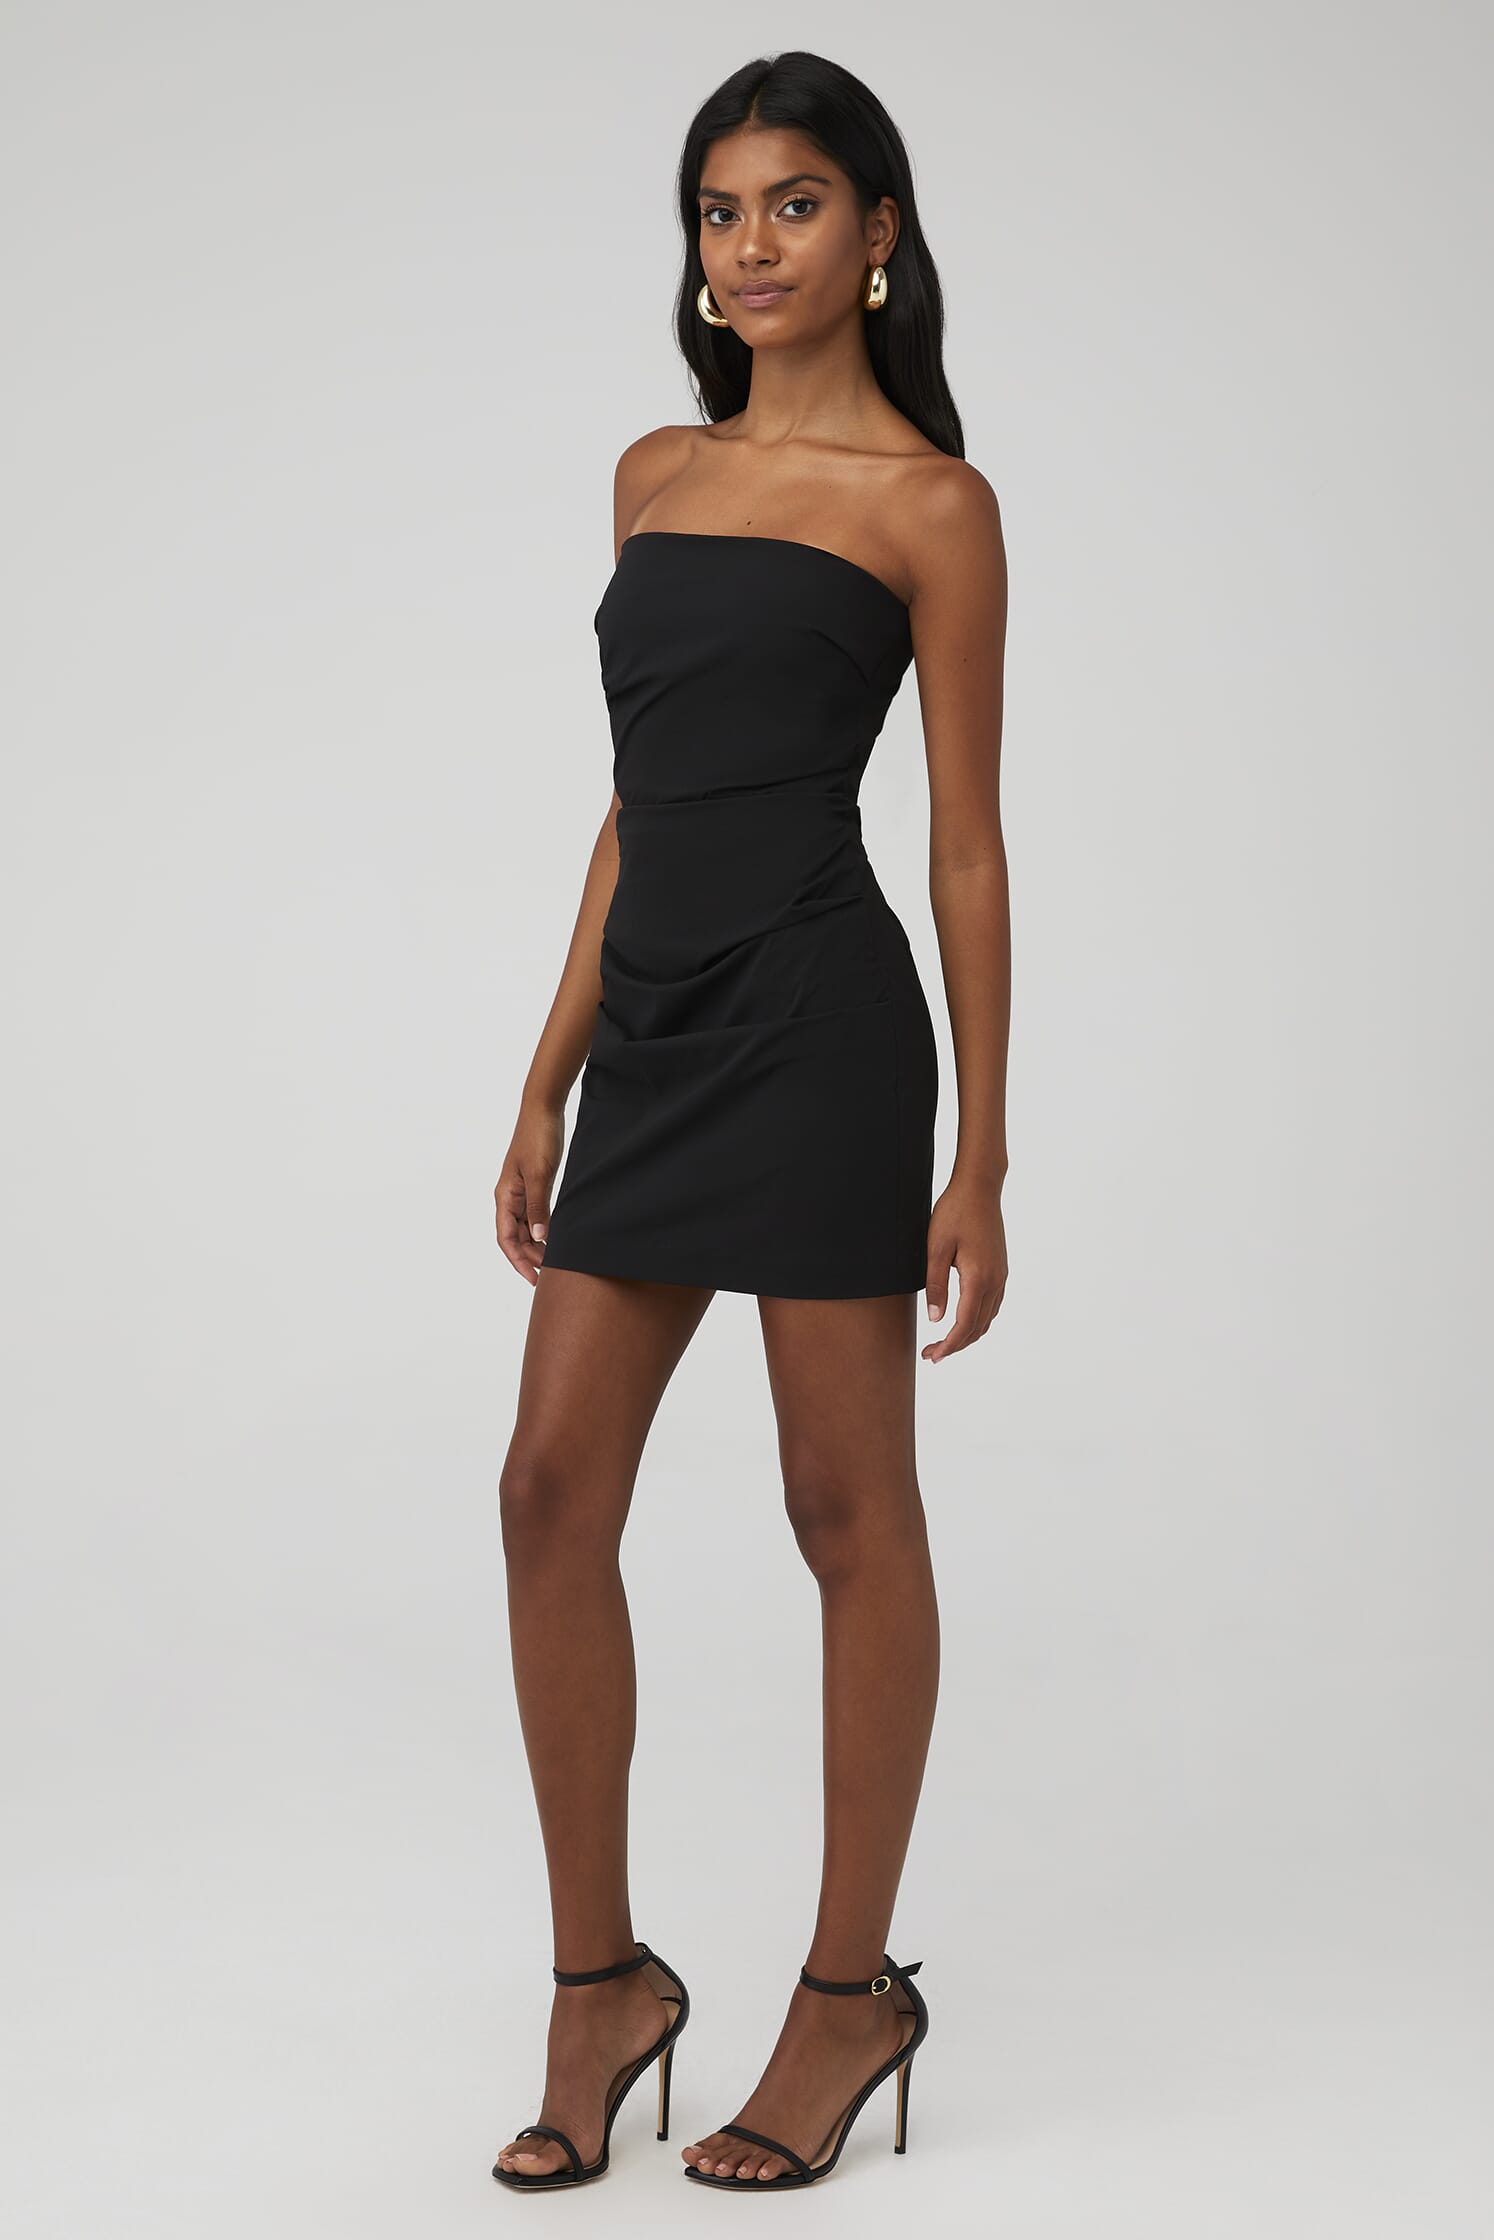 BEC + BRIDGE | Zelie Strapless Mini Dress in Black| FashionPass